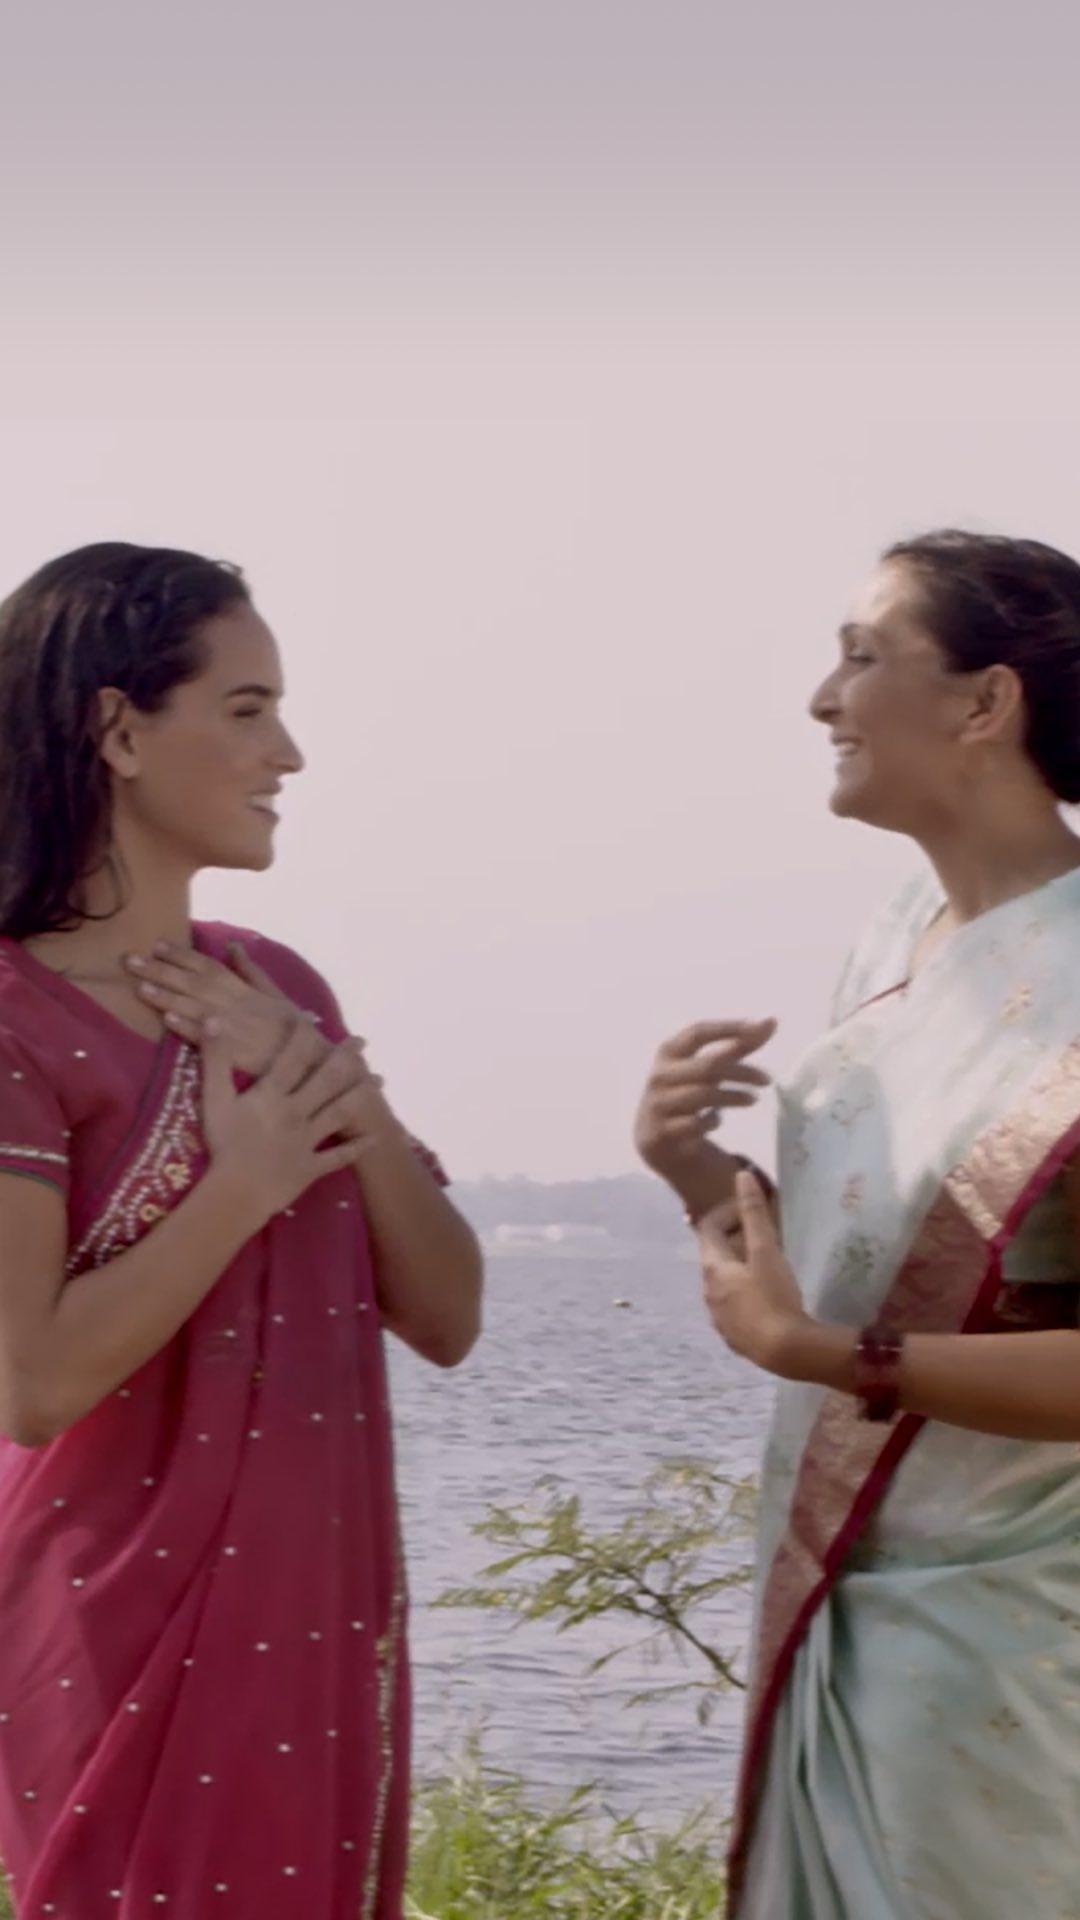 Armani beauty - During their personal and joyful encounter, Kamalika Tejasvi Rao shared the significance of wearing a sari with Adria Arjona. 

Starring: @AdriaArjona and @KamalikaBasak
Credit: @hunte...